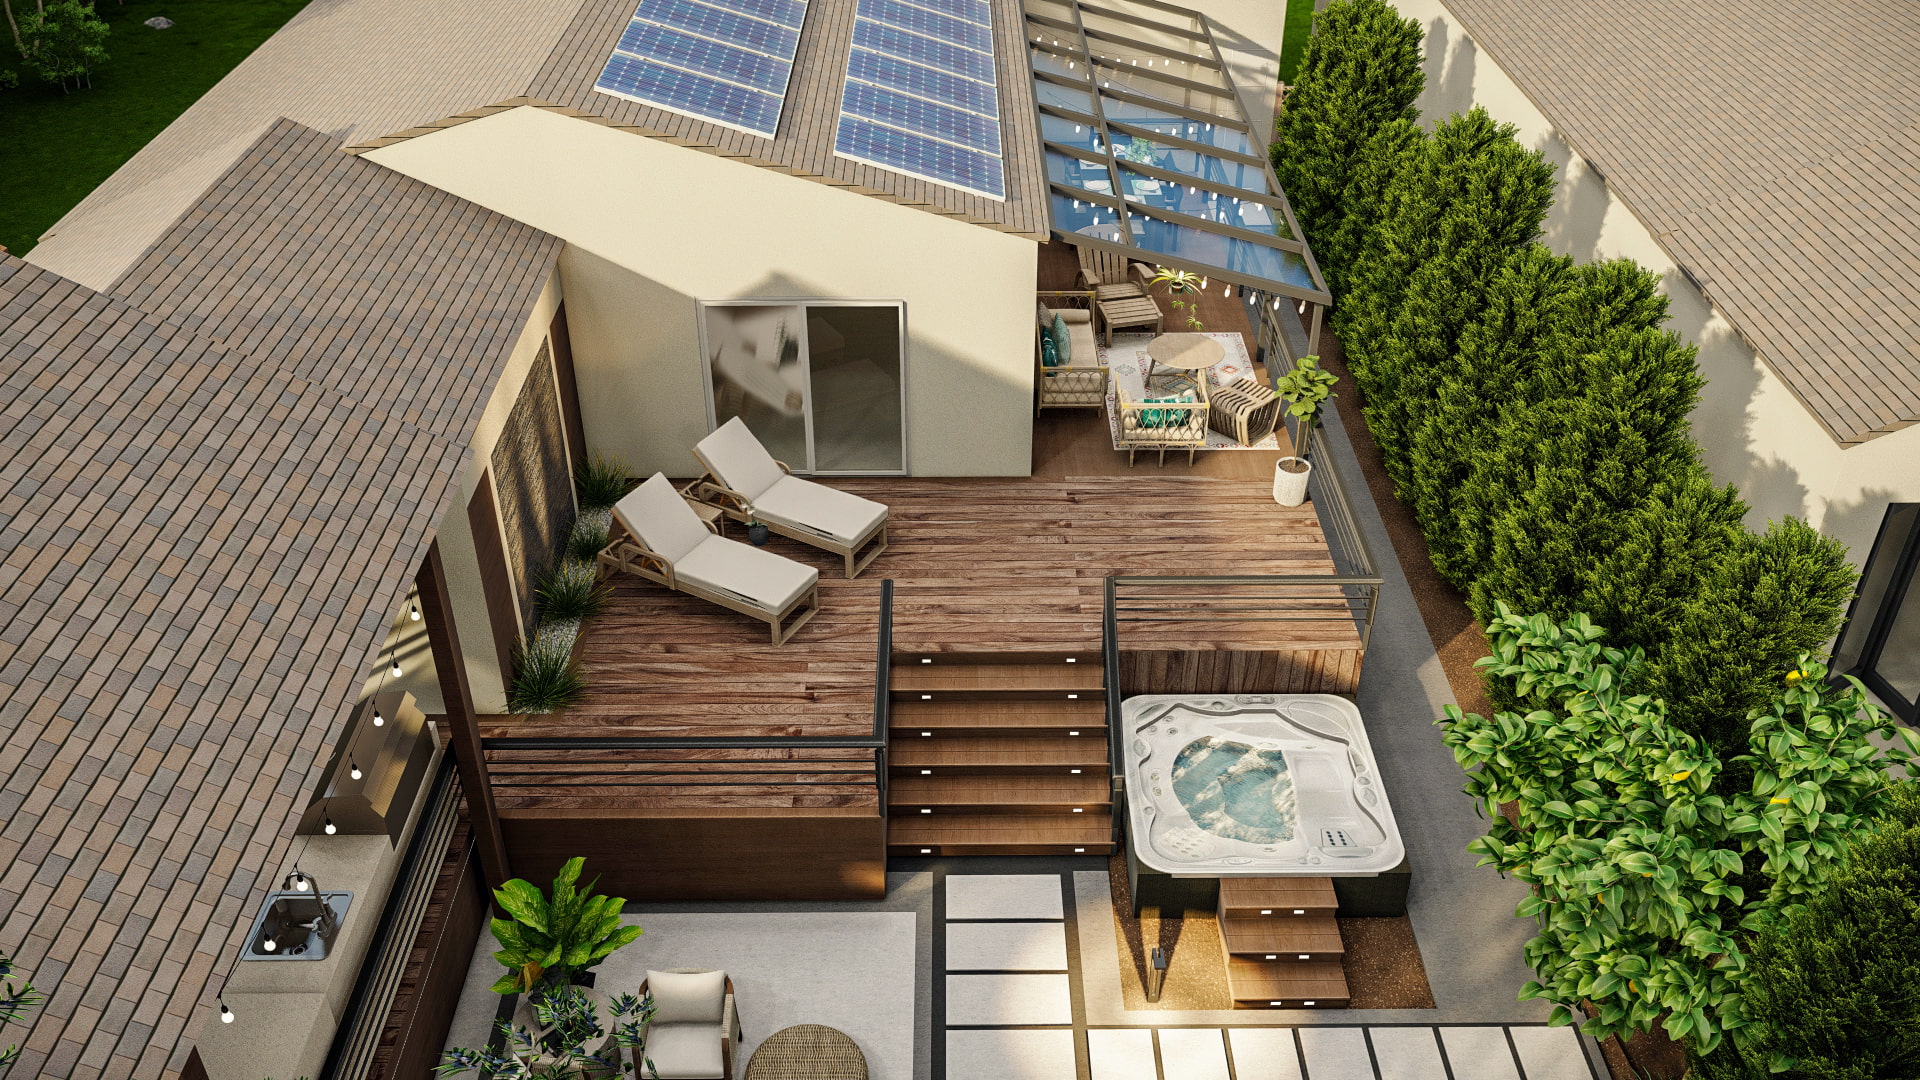 Solar panels energy saving outdoor design